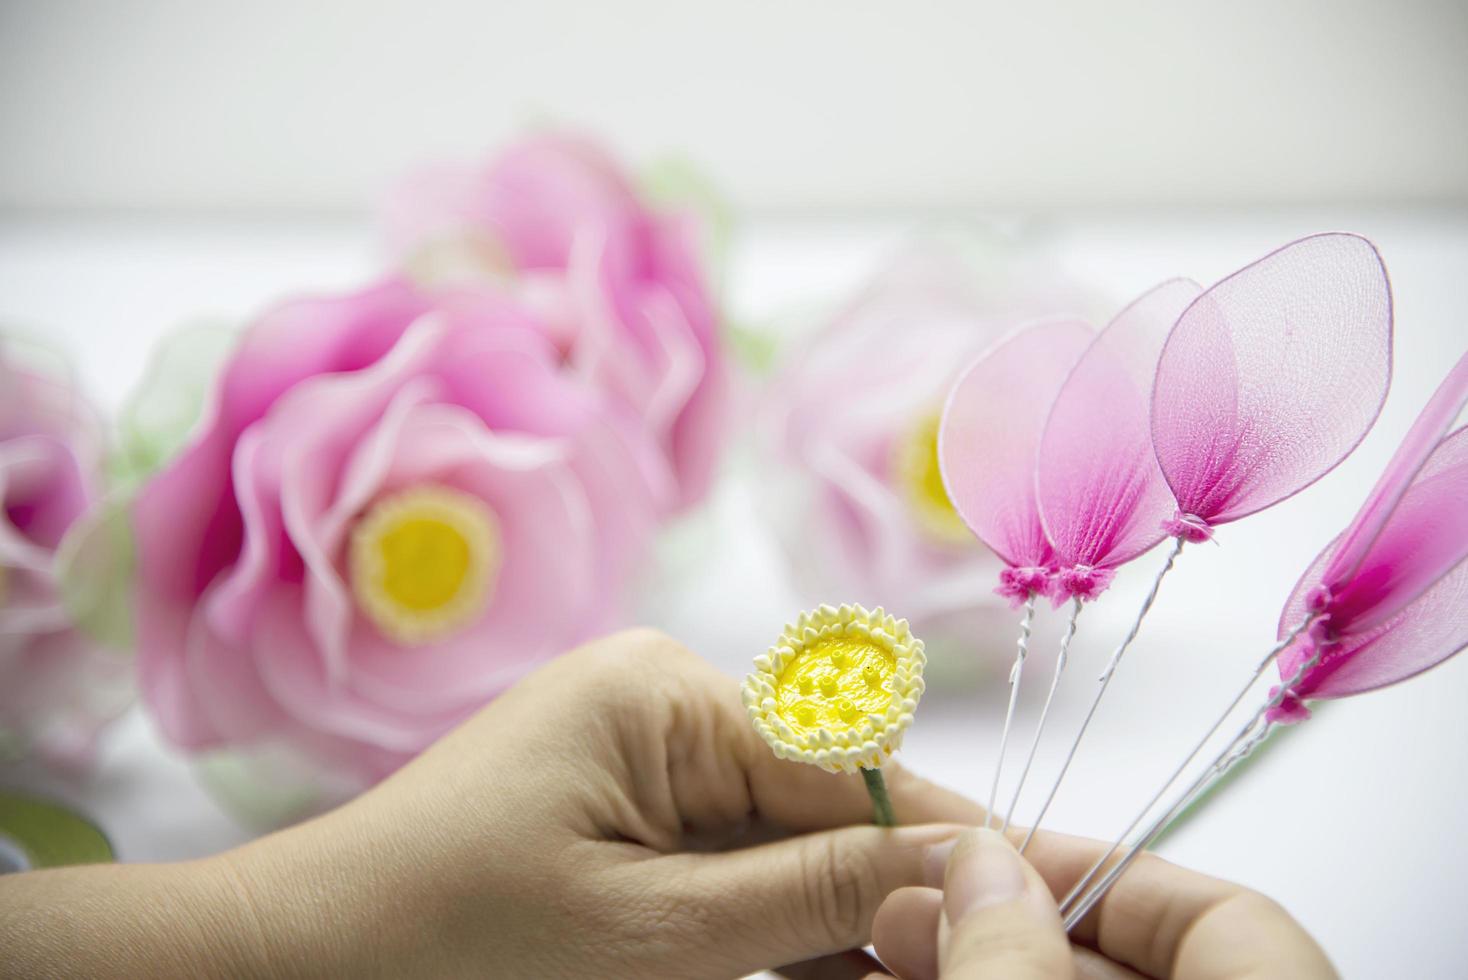 Woman making beautiful nylon flower - people with DIY handmade flower concept photo